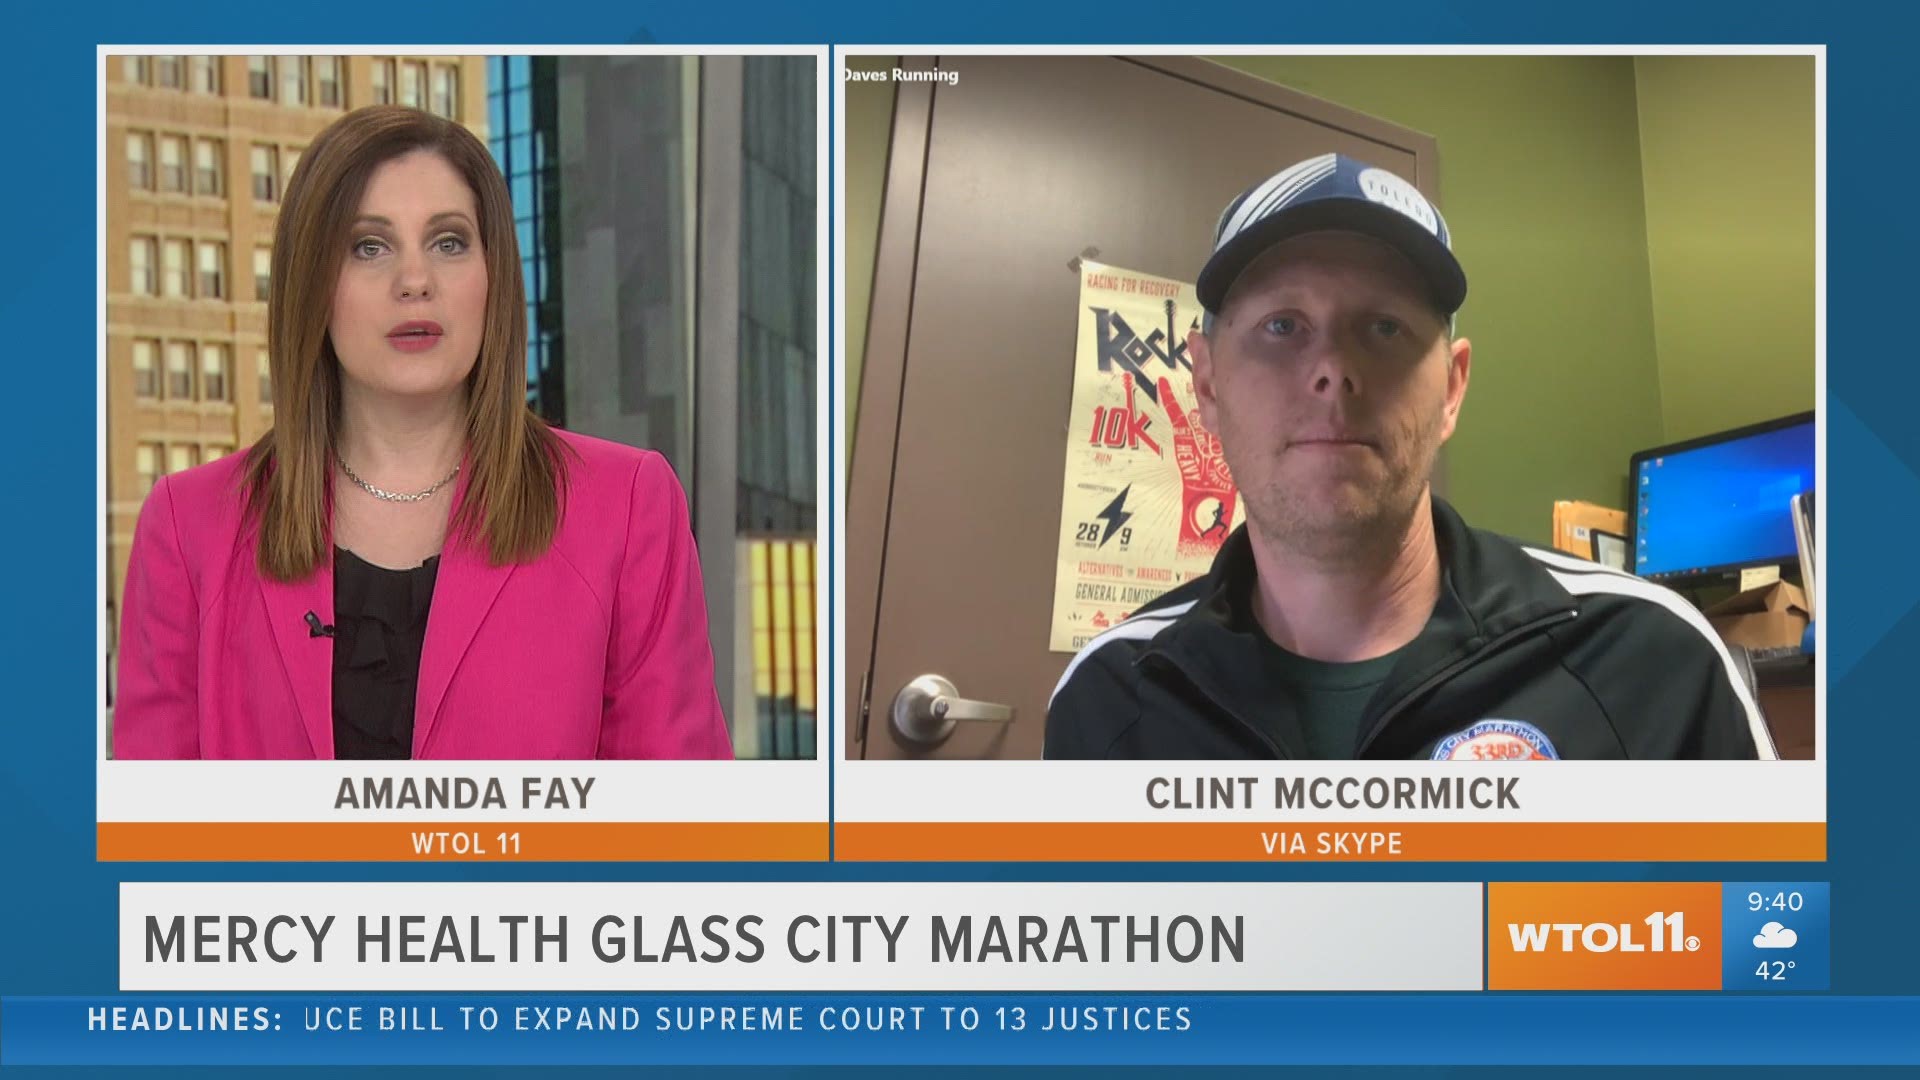 Get ready to run! The Mercy Health Glass City Marathon is next weekend!